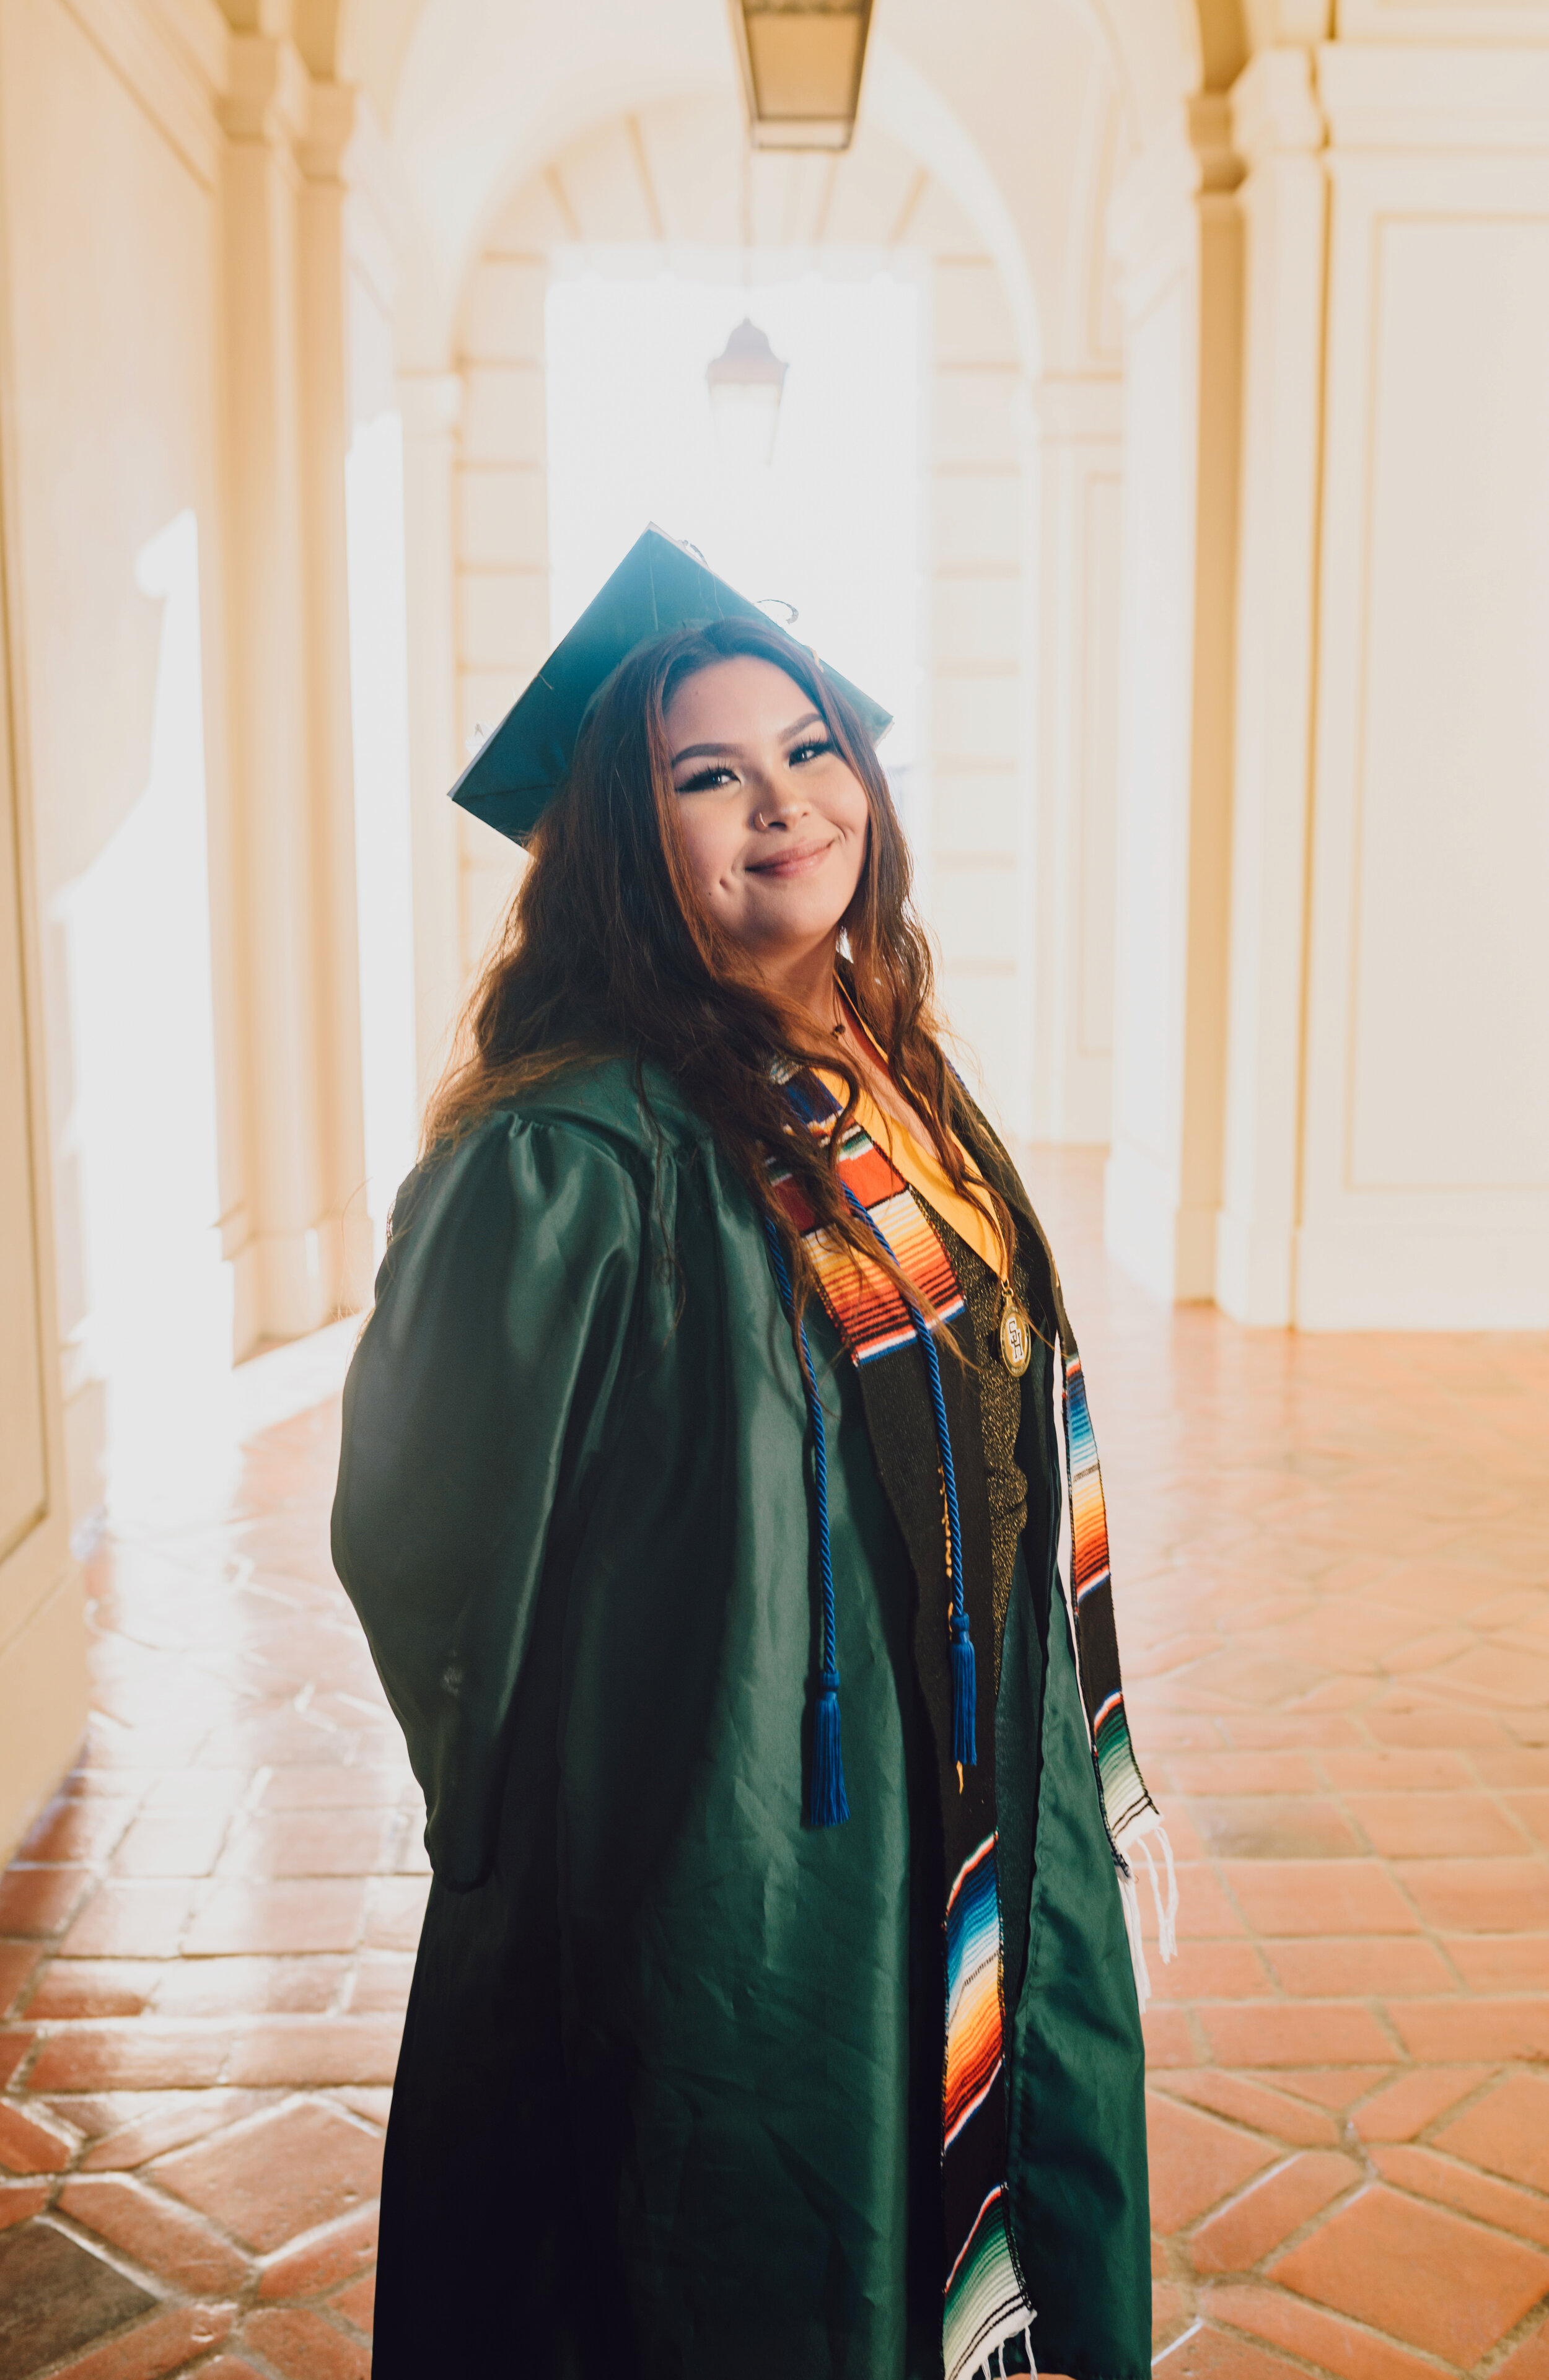 LosAngeles-Graduation-Portrait-Photographer-High-School-11.jpg